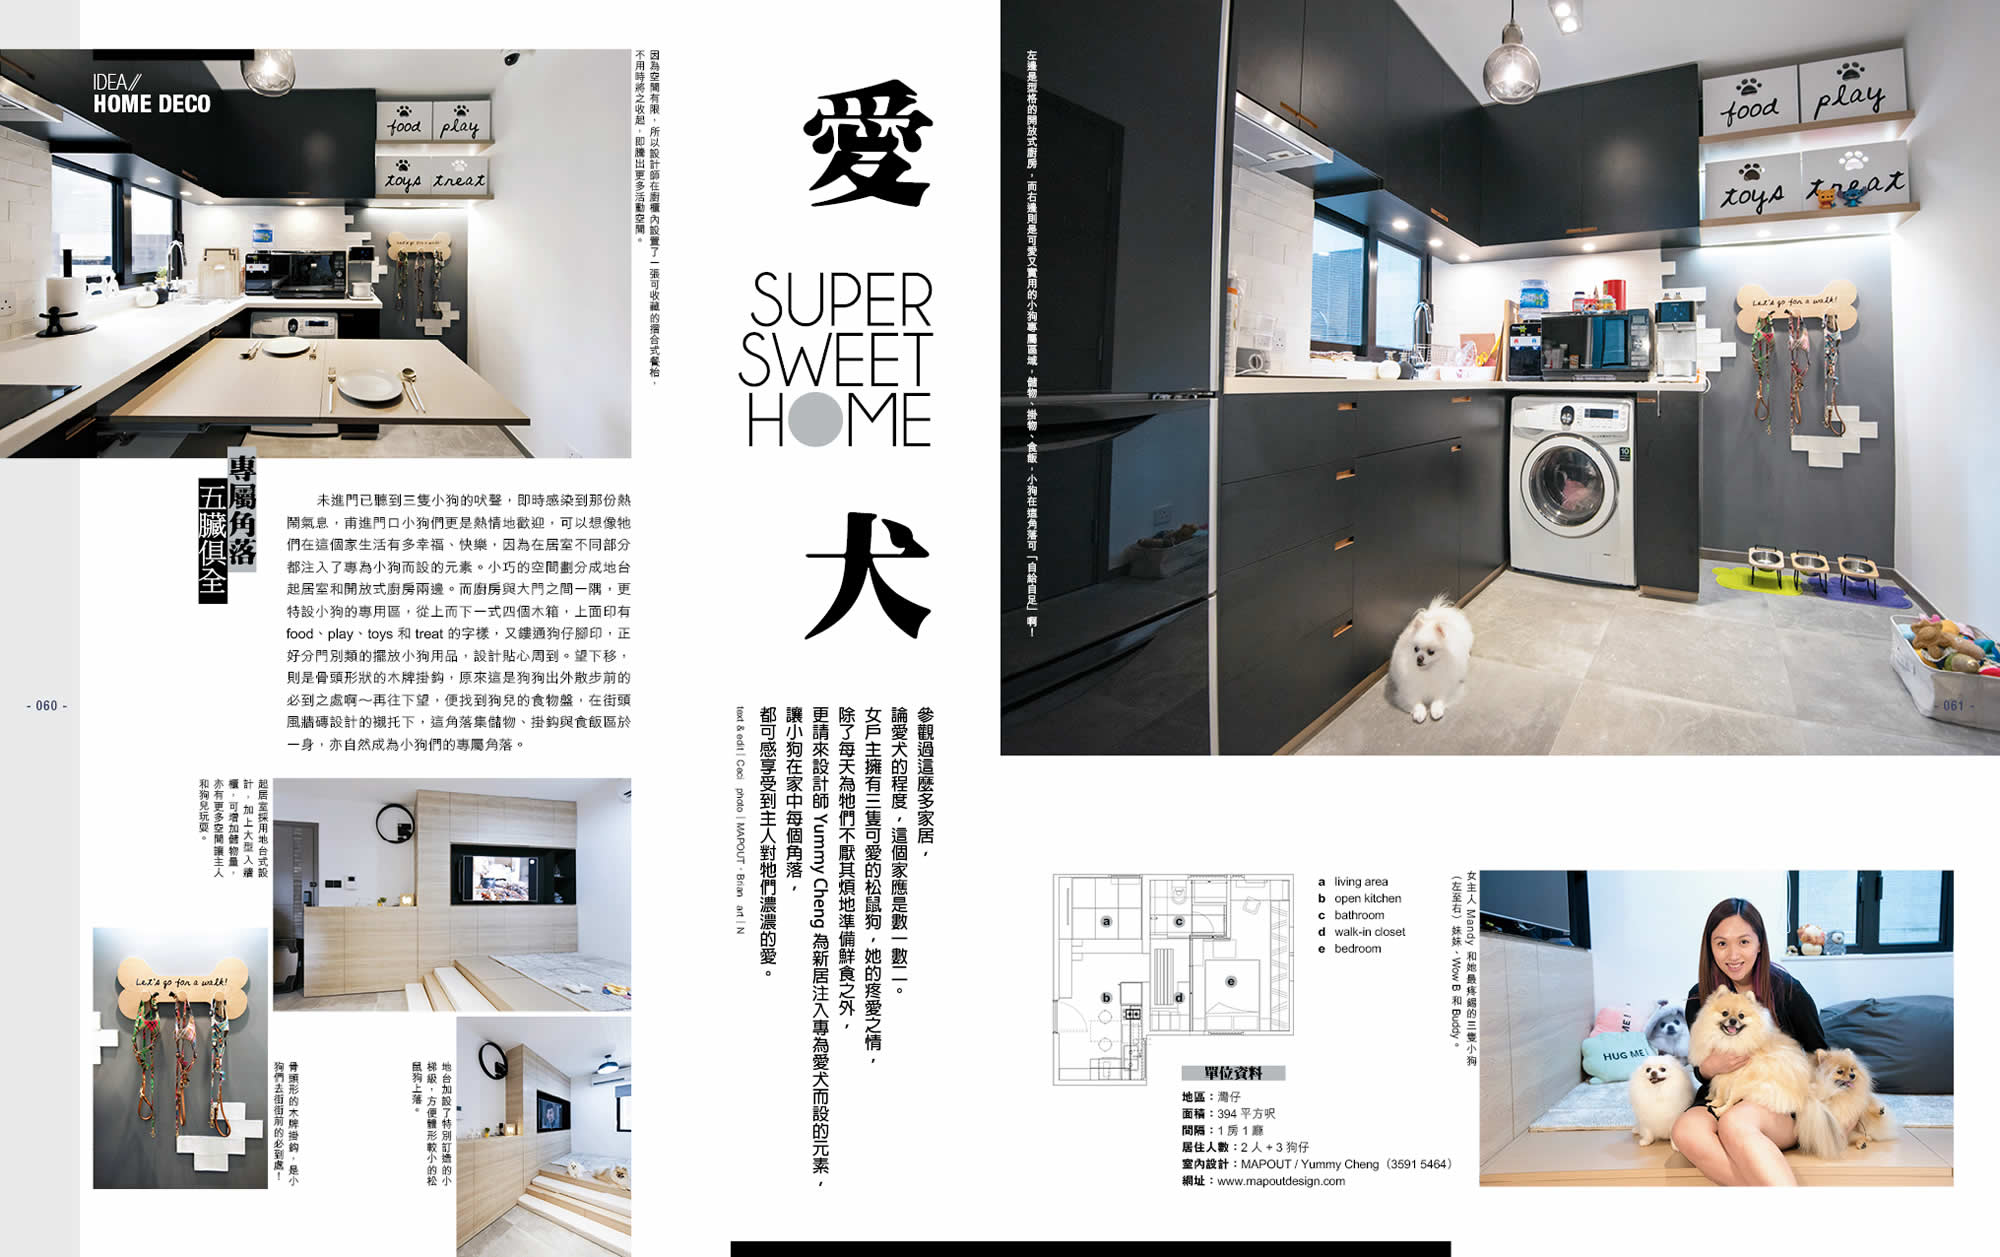 U Magazine - Home Deco (Super Sweet Home) 1